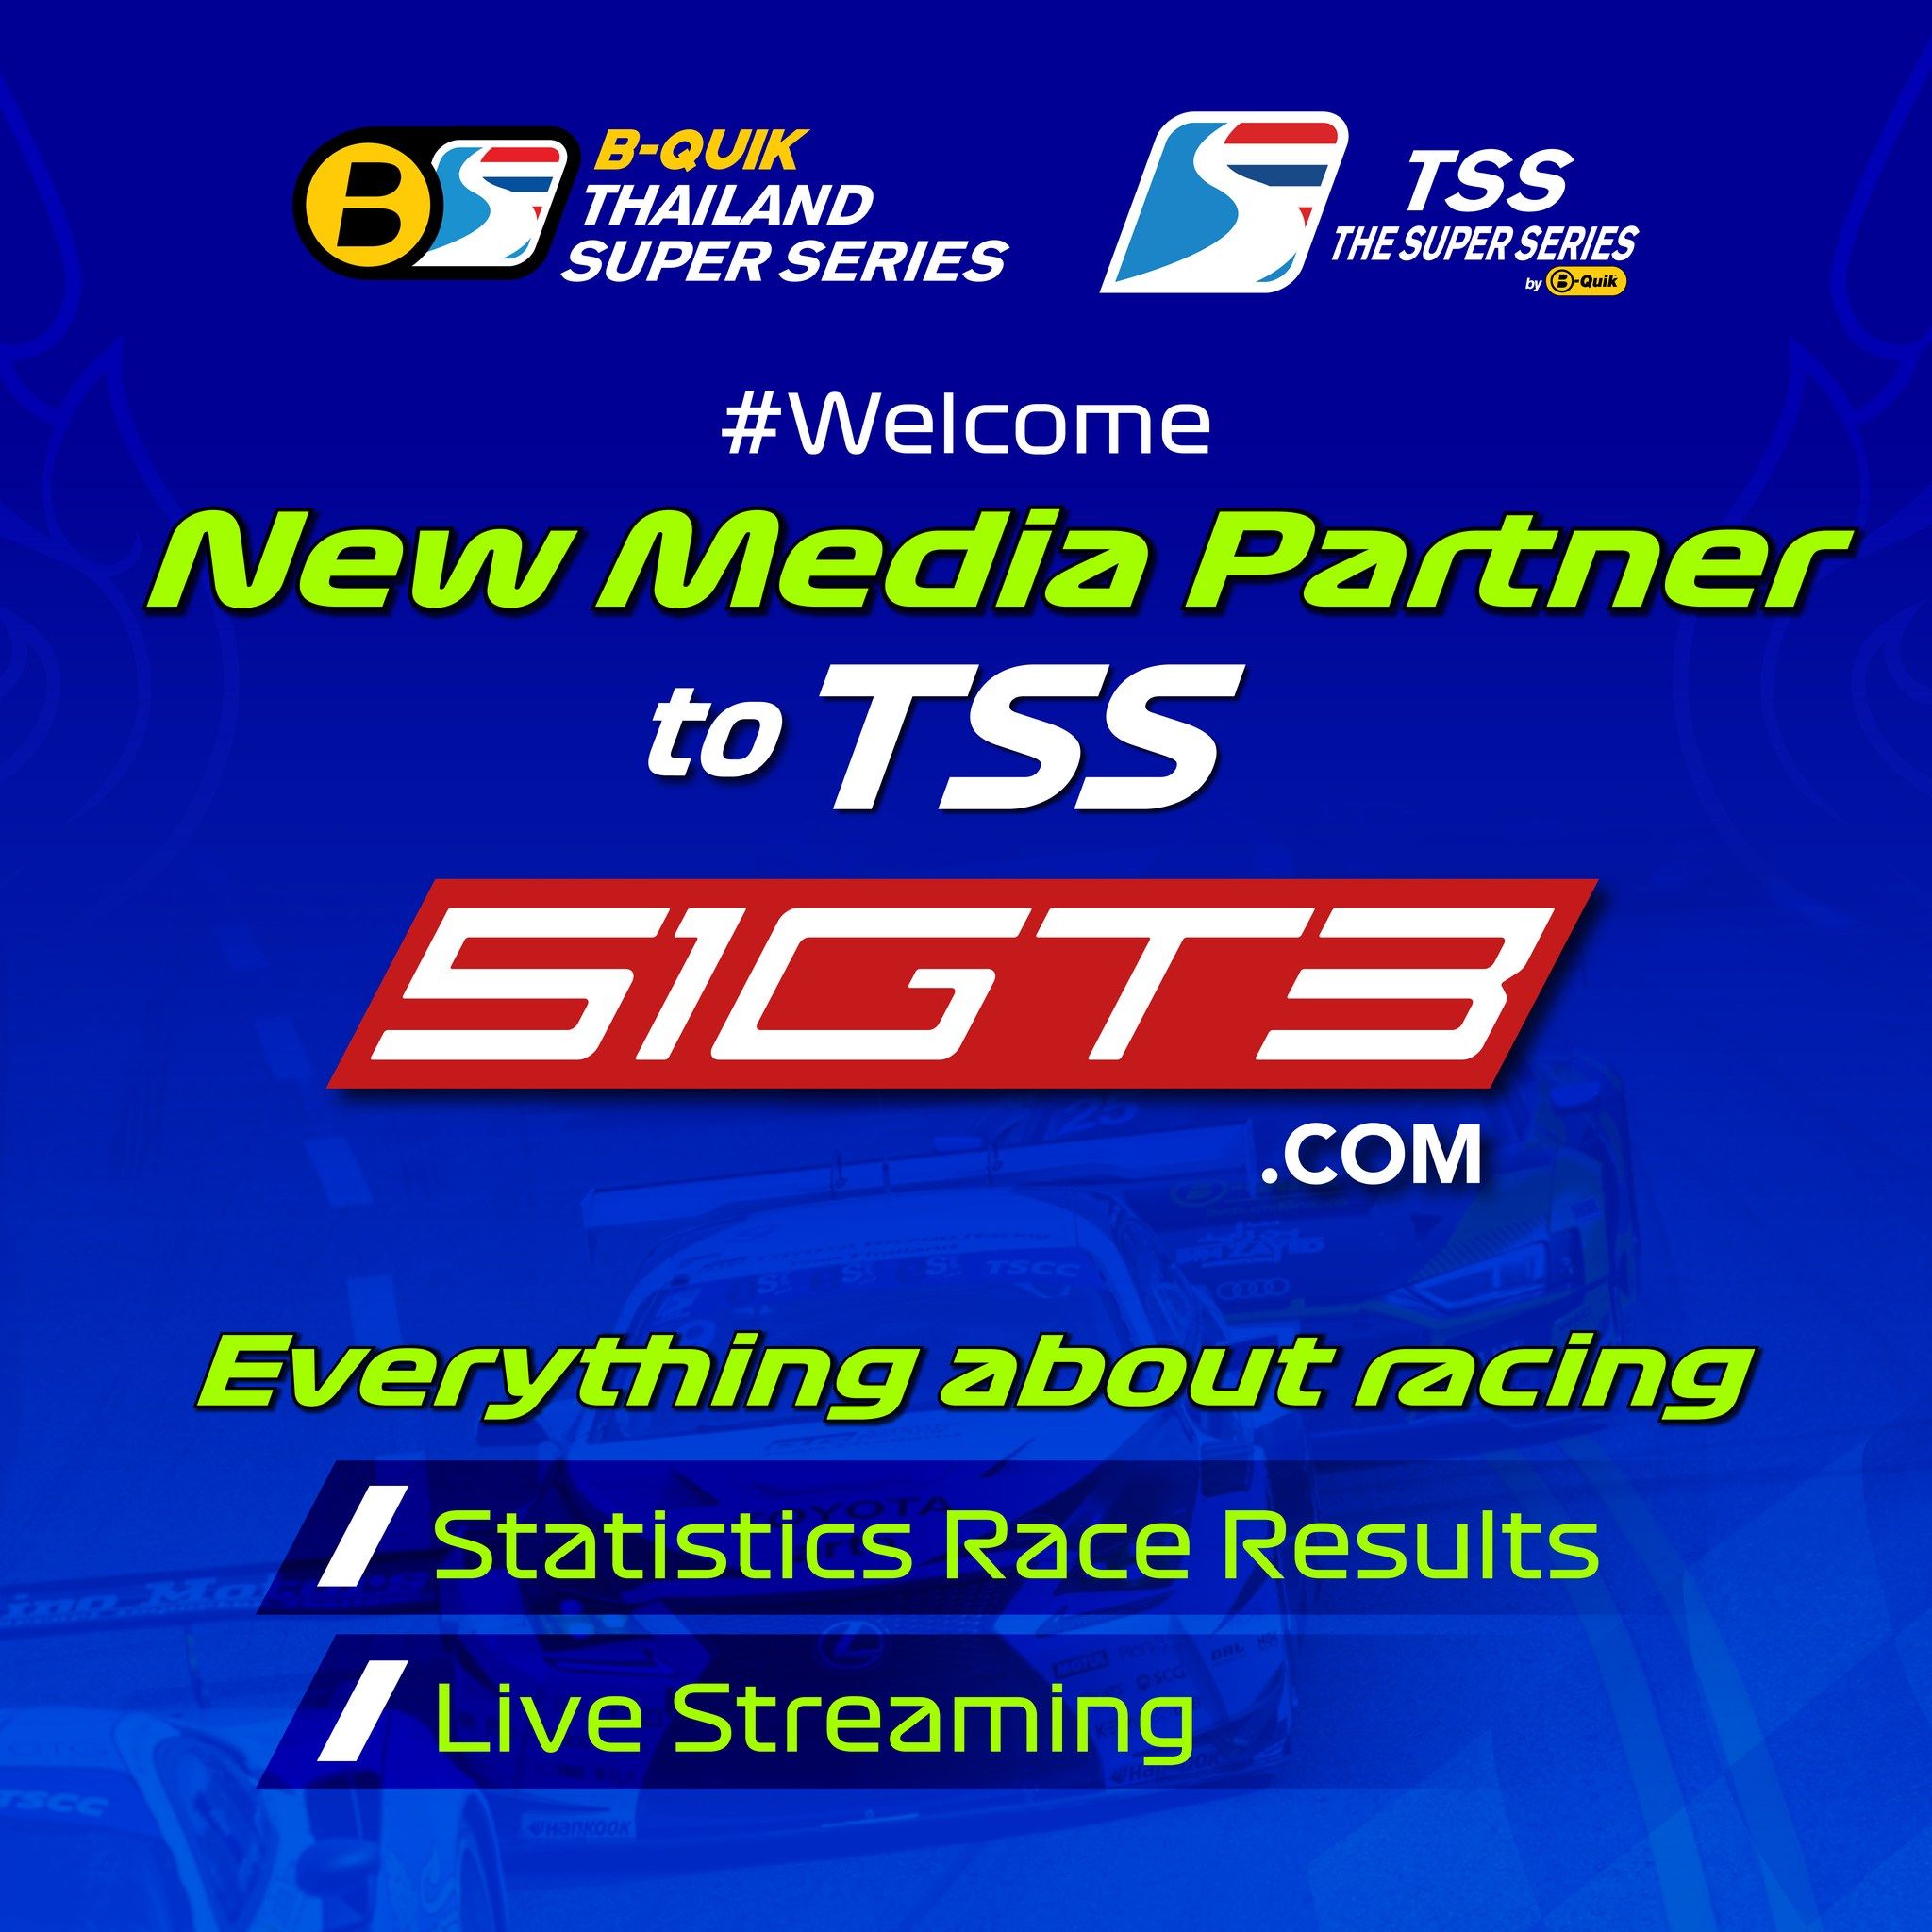 Welcome new media partner to TSS - 51GT3.com